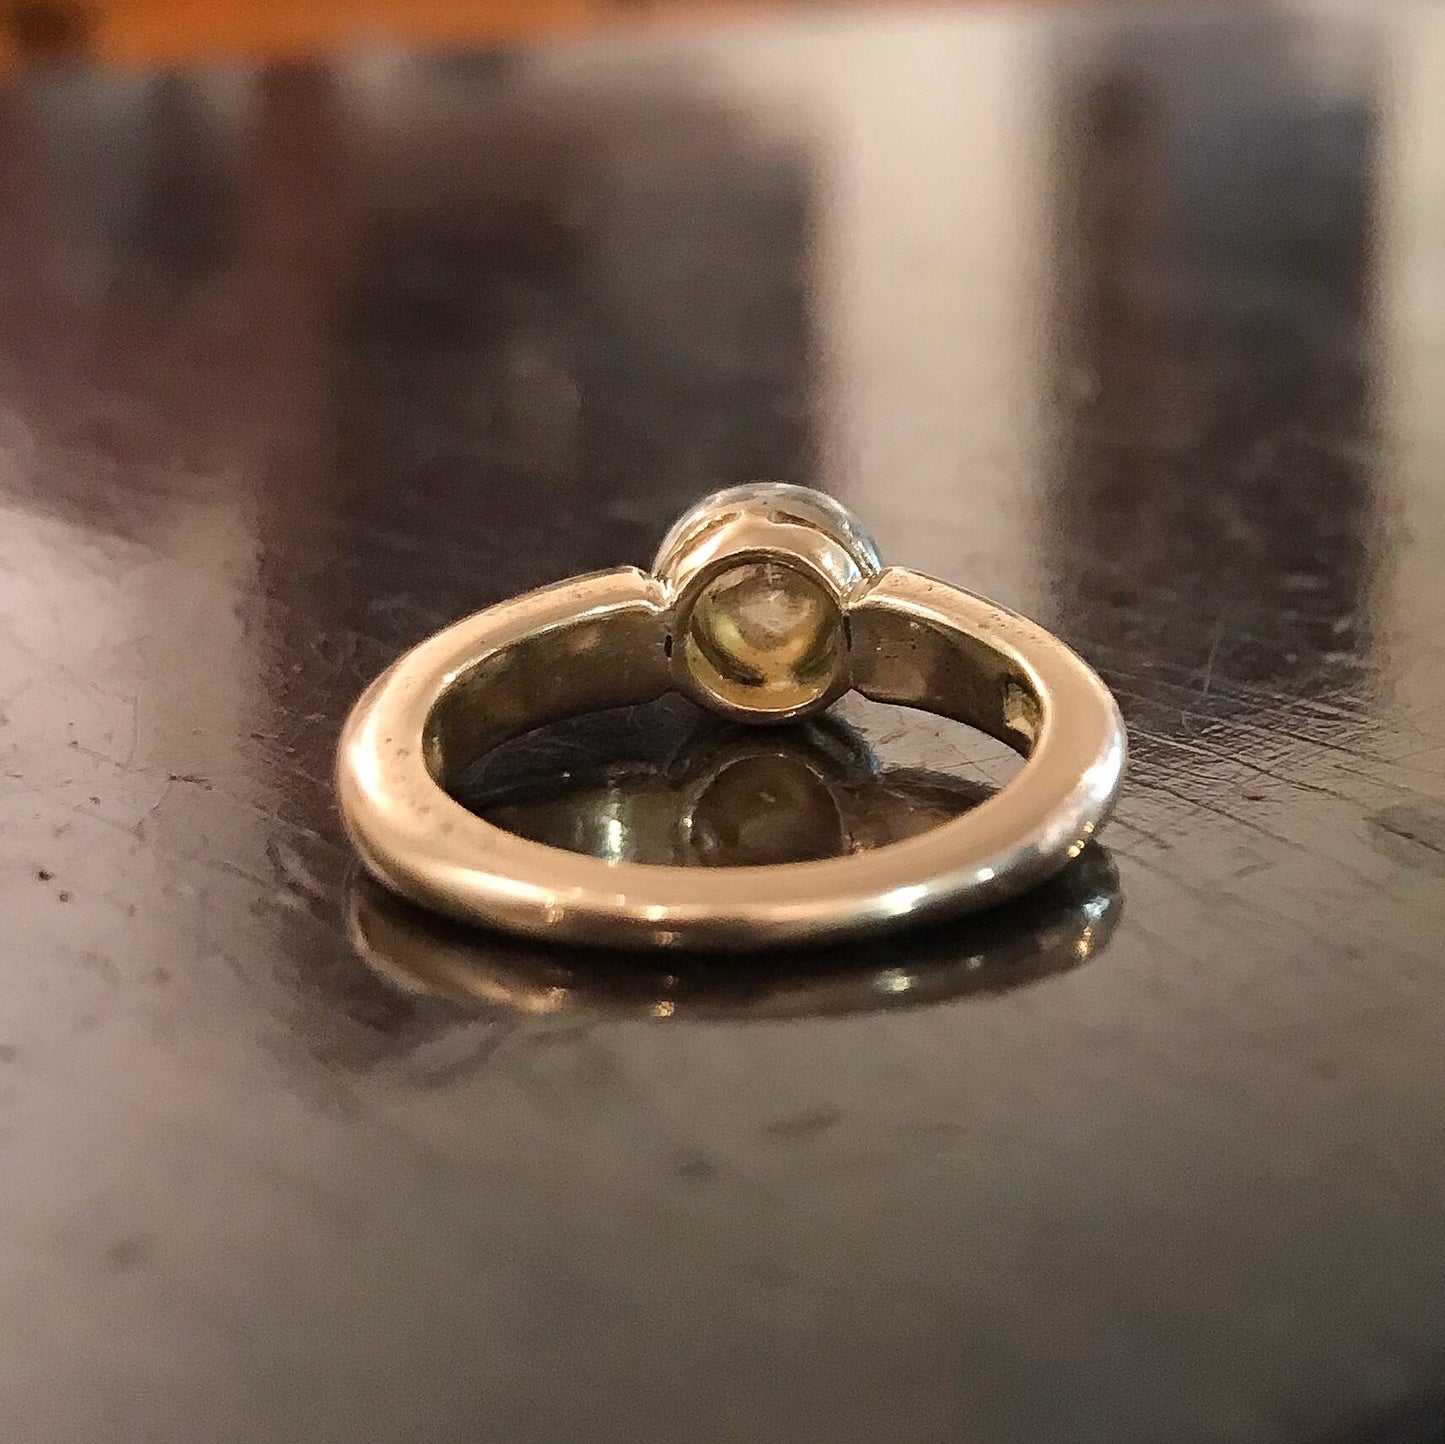 SOLD--Antique Bezel Set Rose Cut Diamond Engagement Ring Silver/14k c. 1900